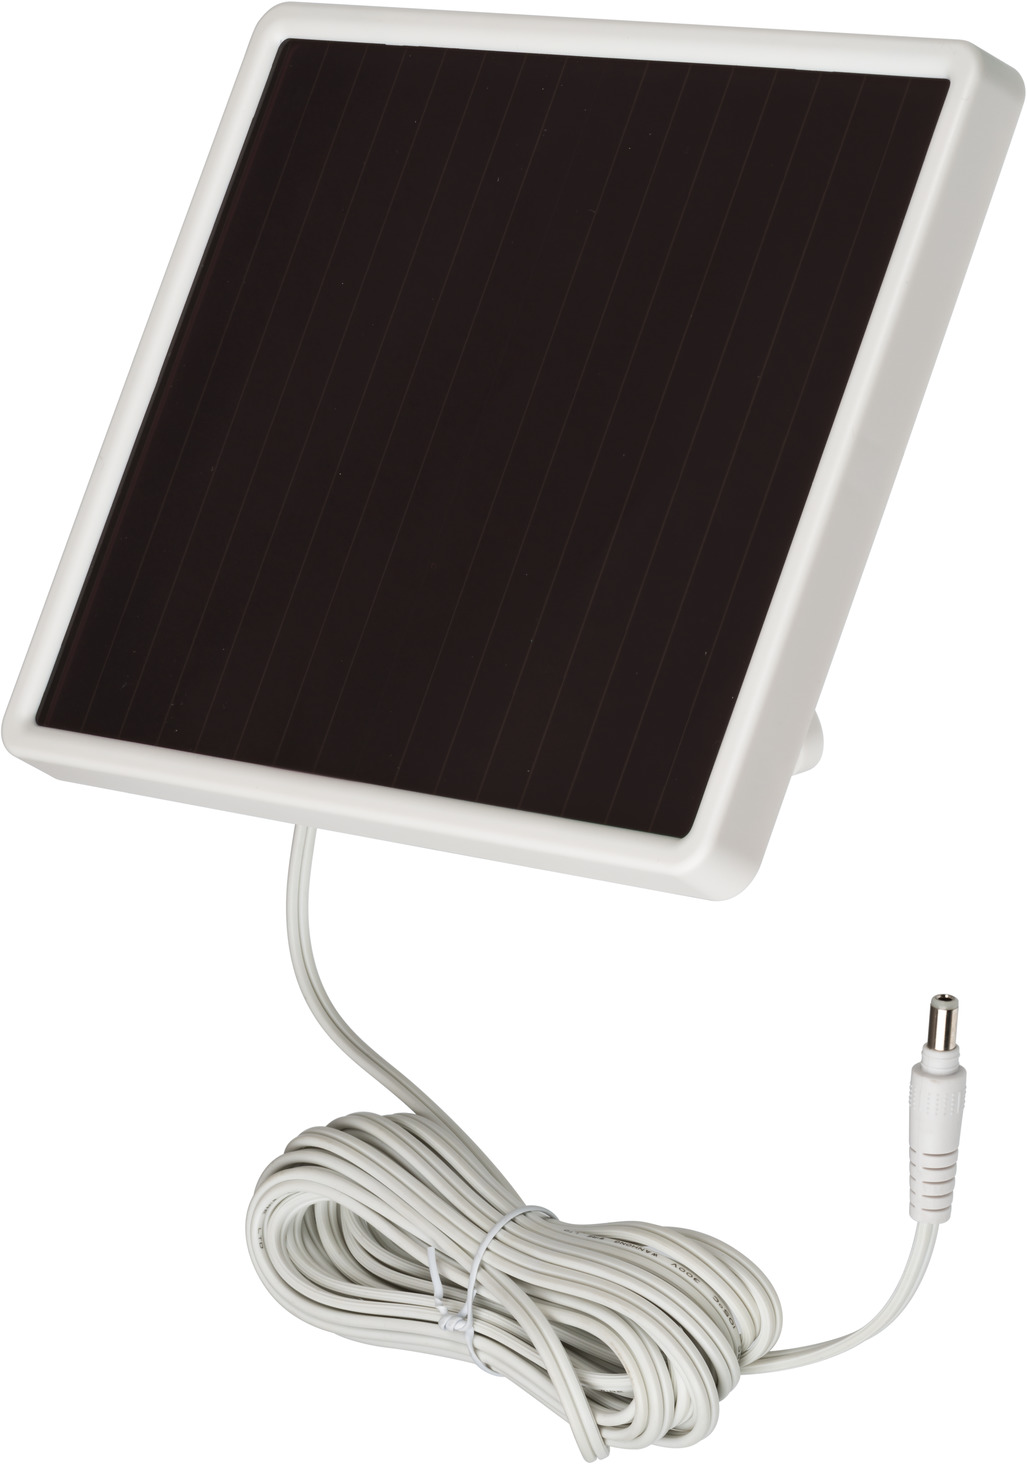 Infrarot-Bewegungsmelder Solar mit SOL weiss LED-Strahler 800 | IP44 brennenstuhl®